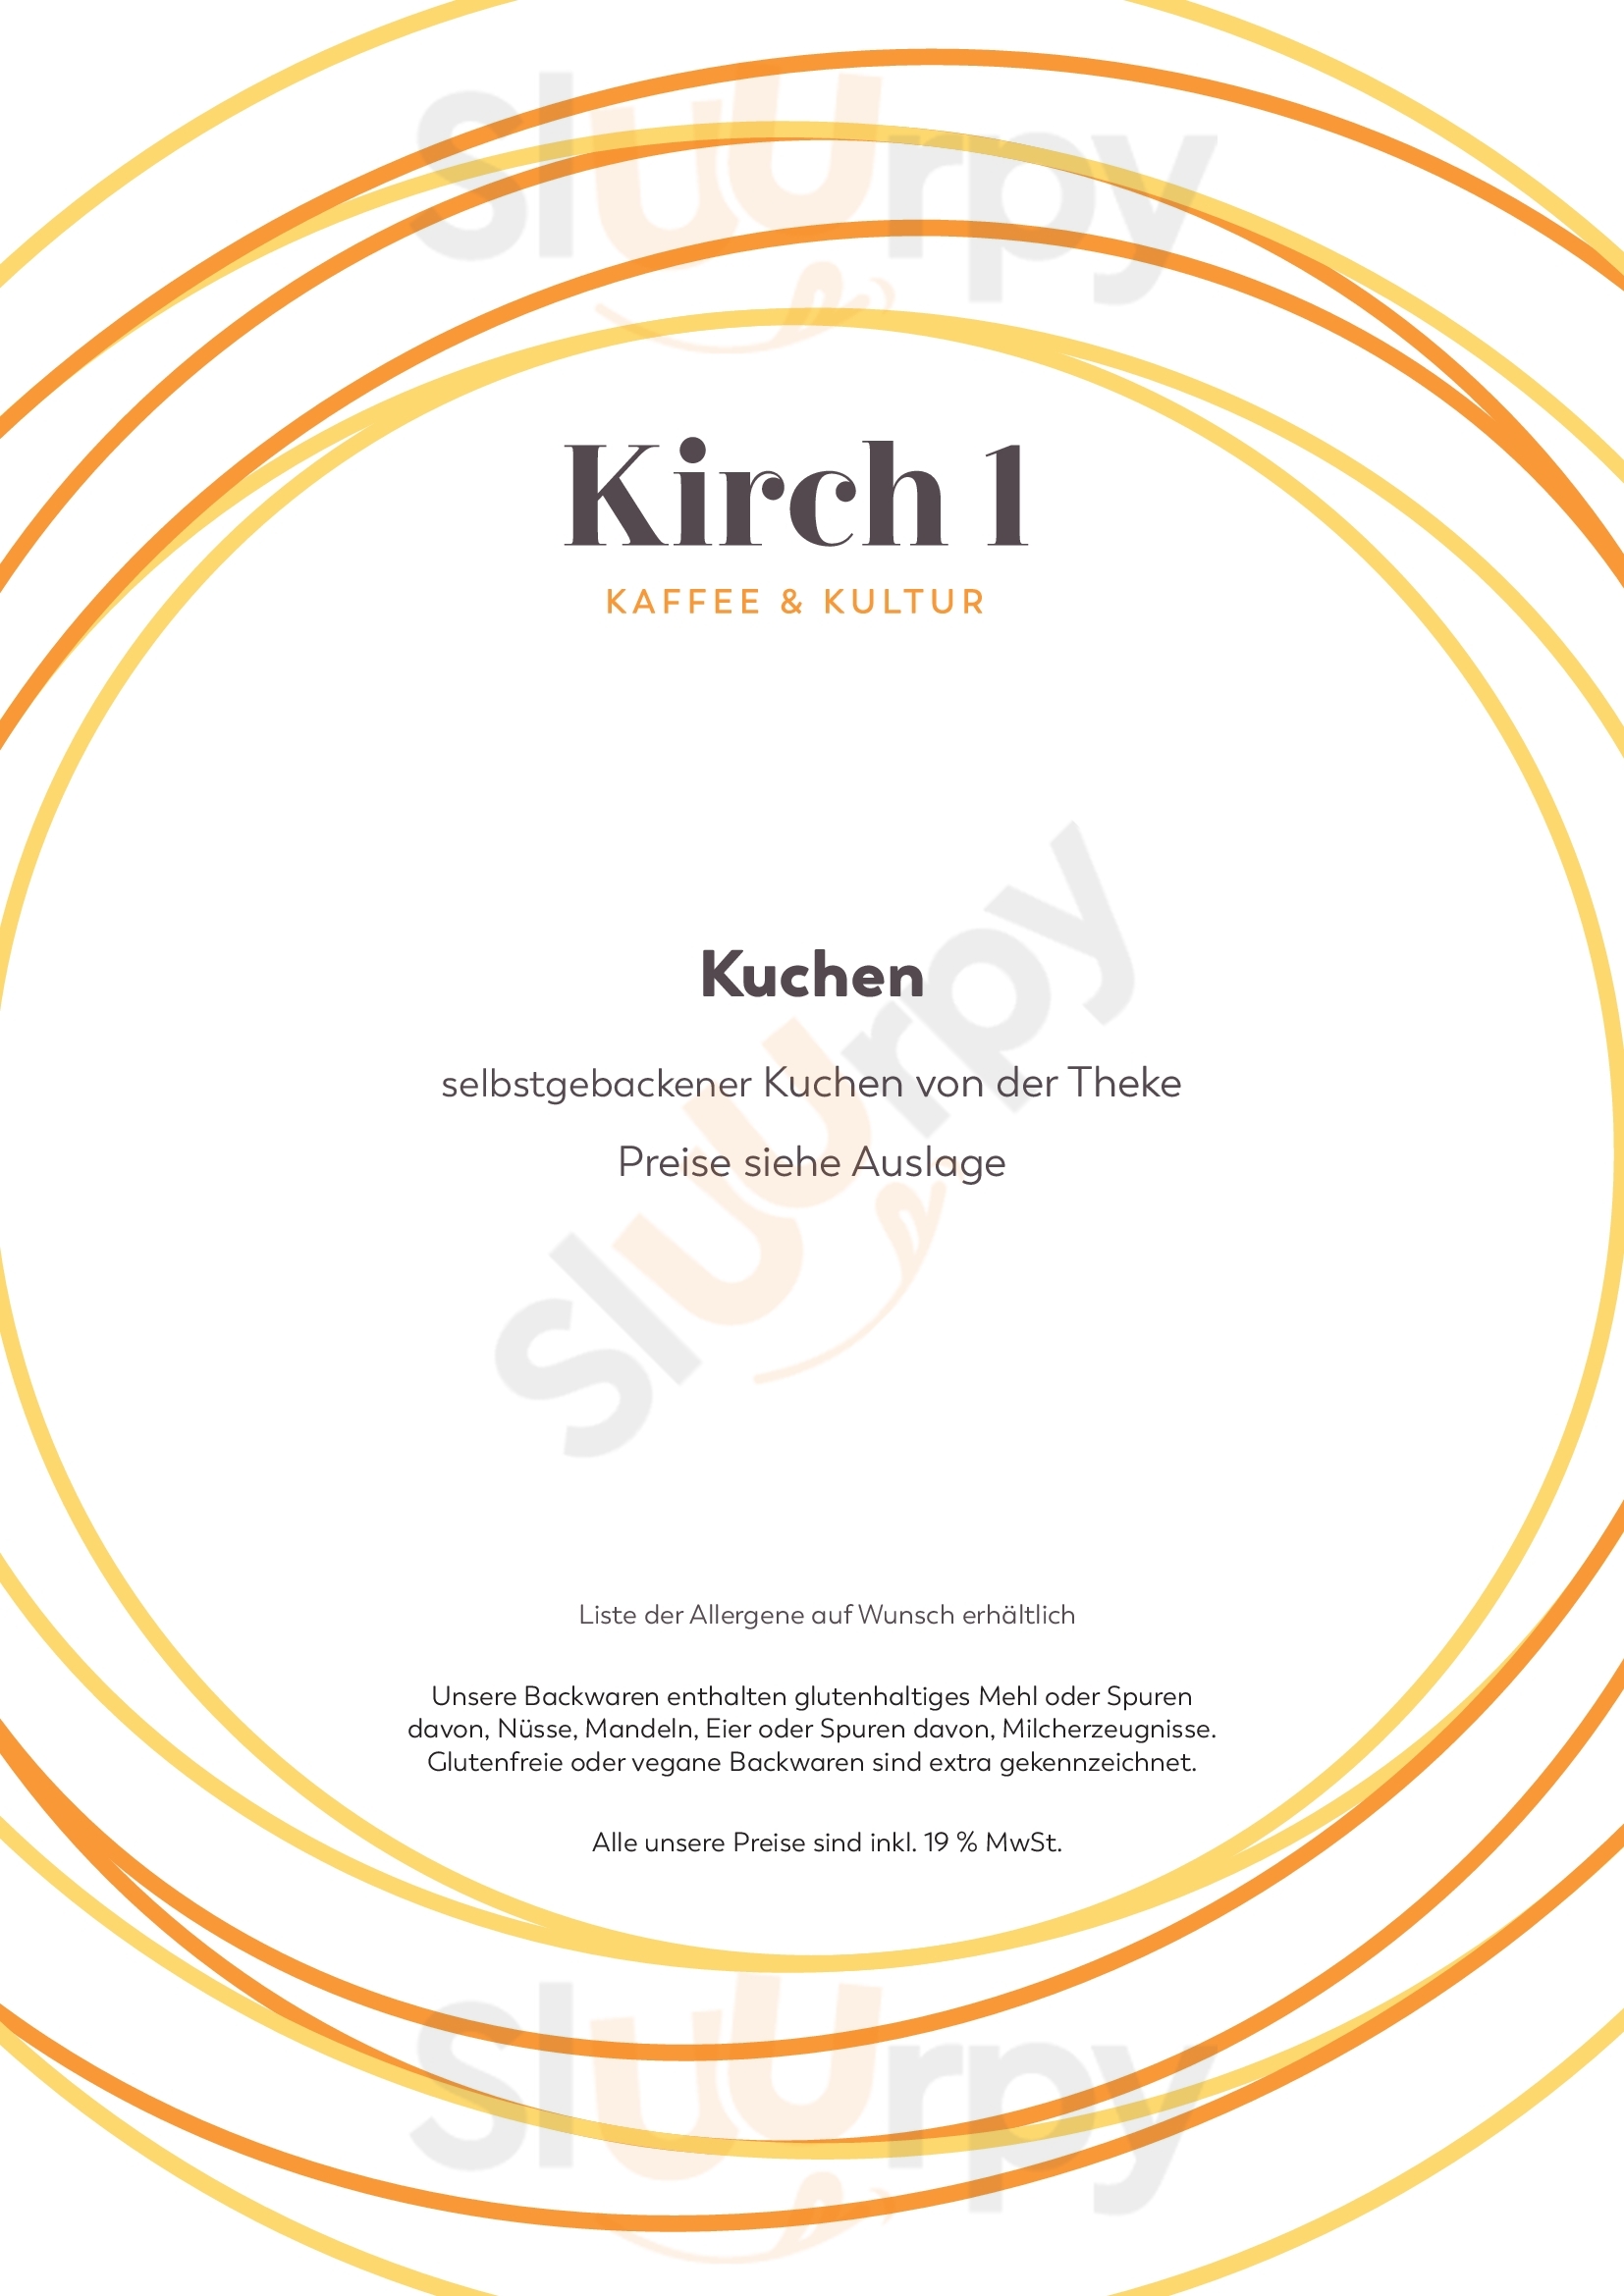 Kirch1 Cafe Bad Schwalbach Menu - 1